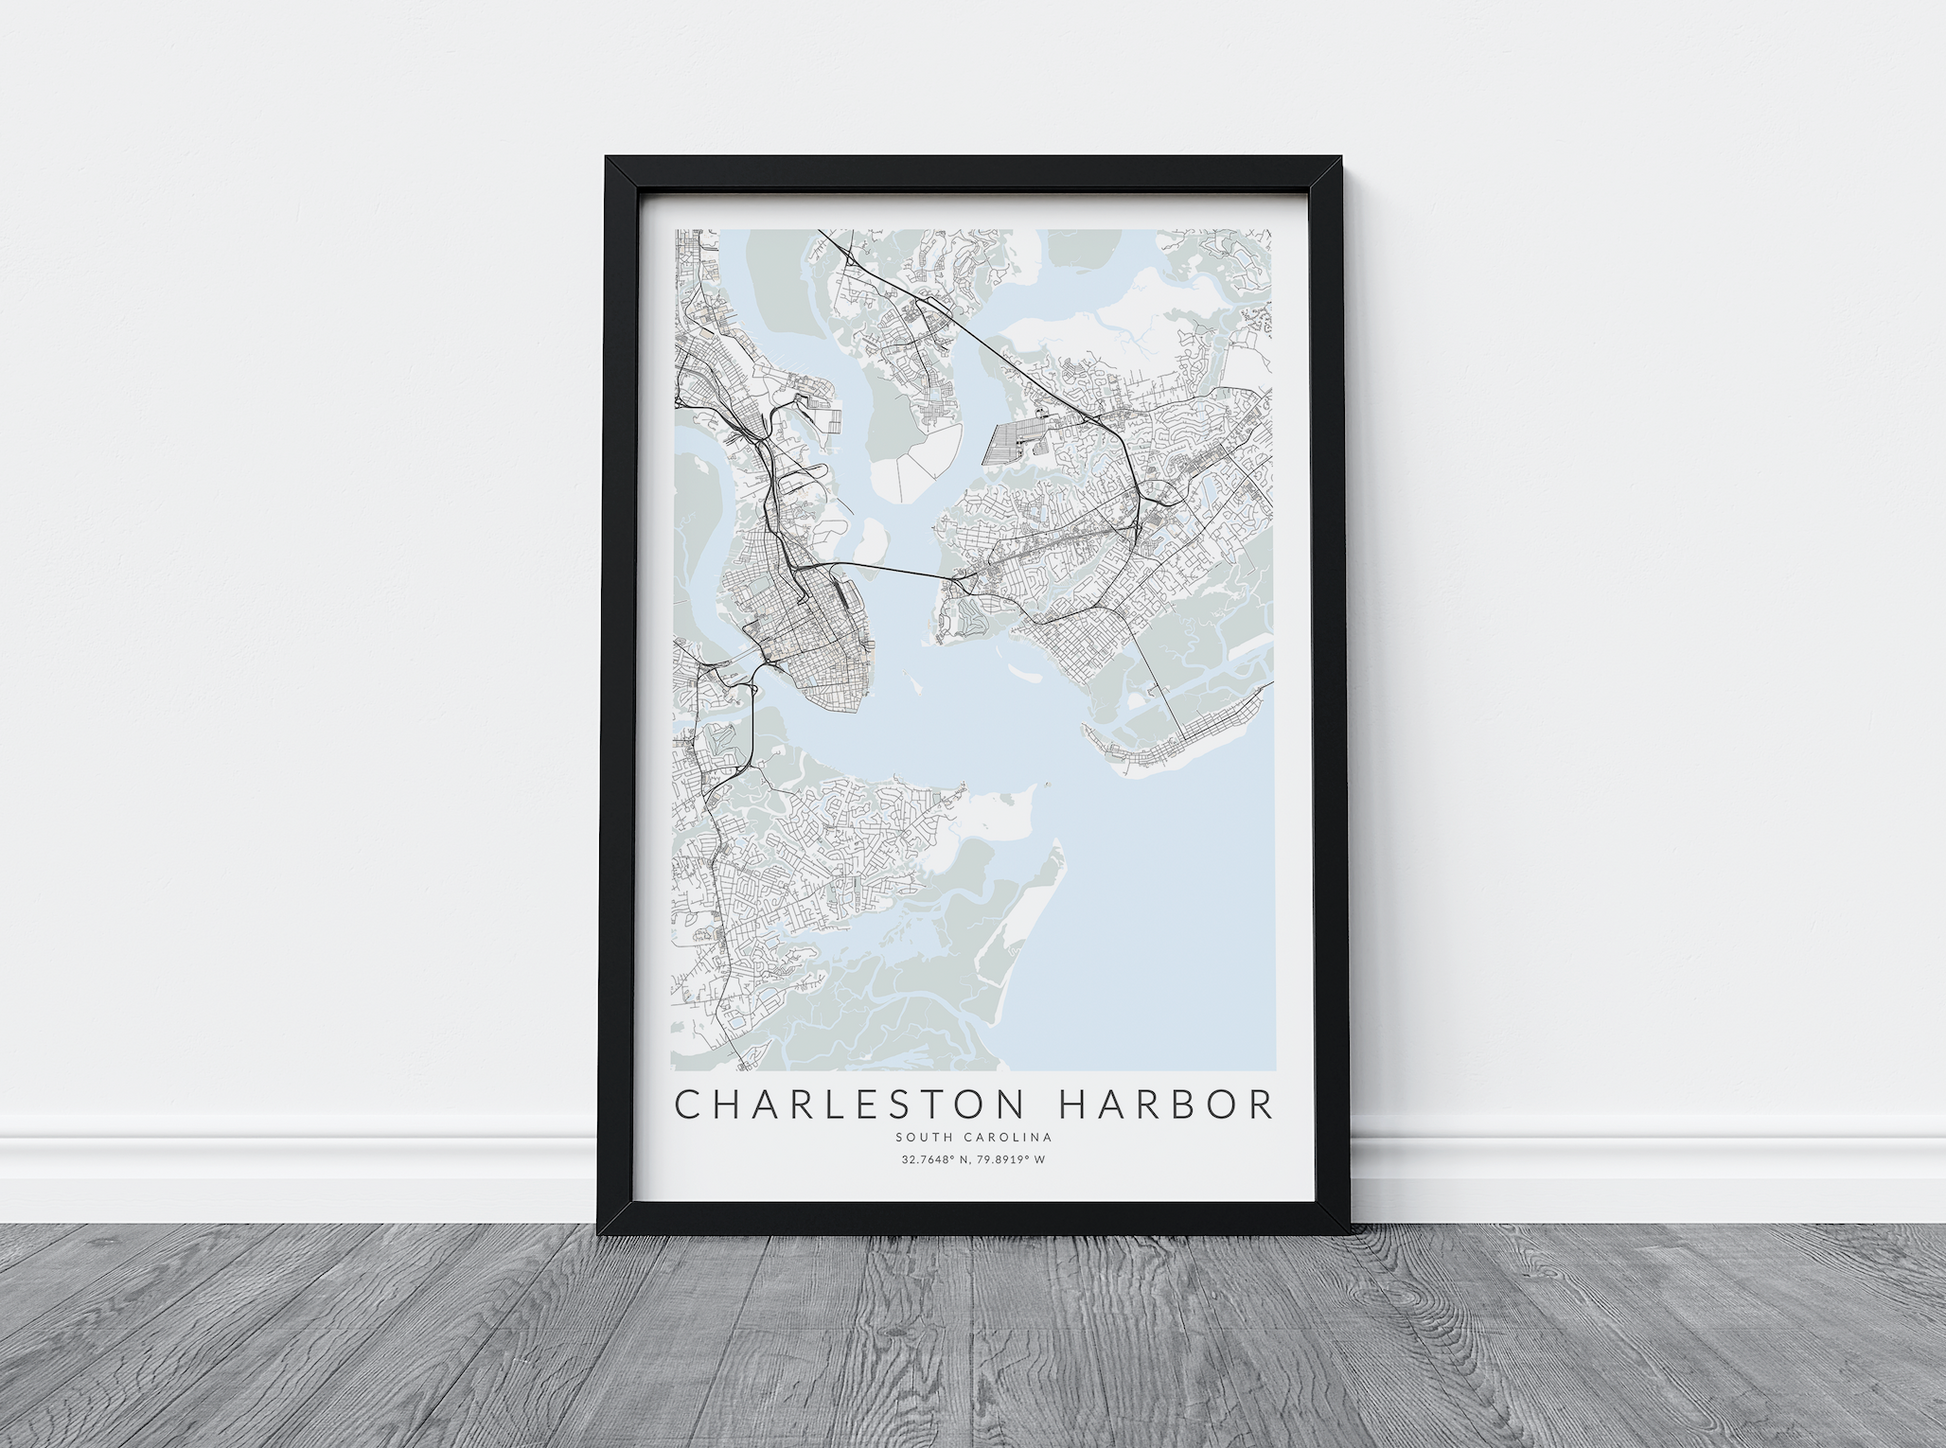 charleston harbor print in wood frame